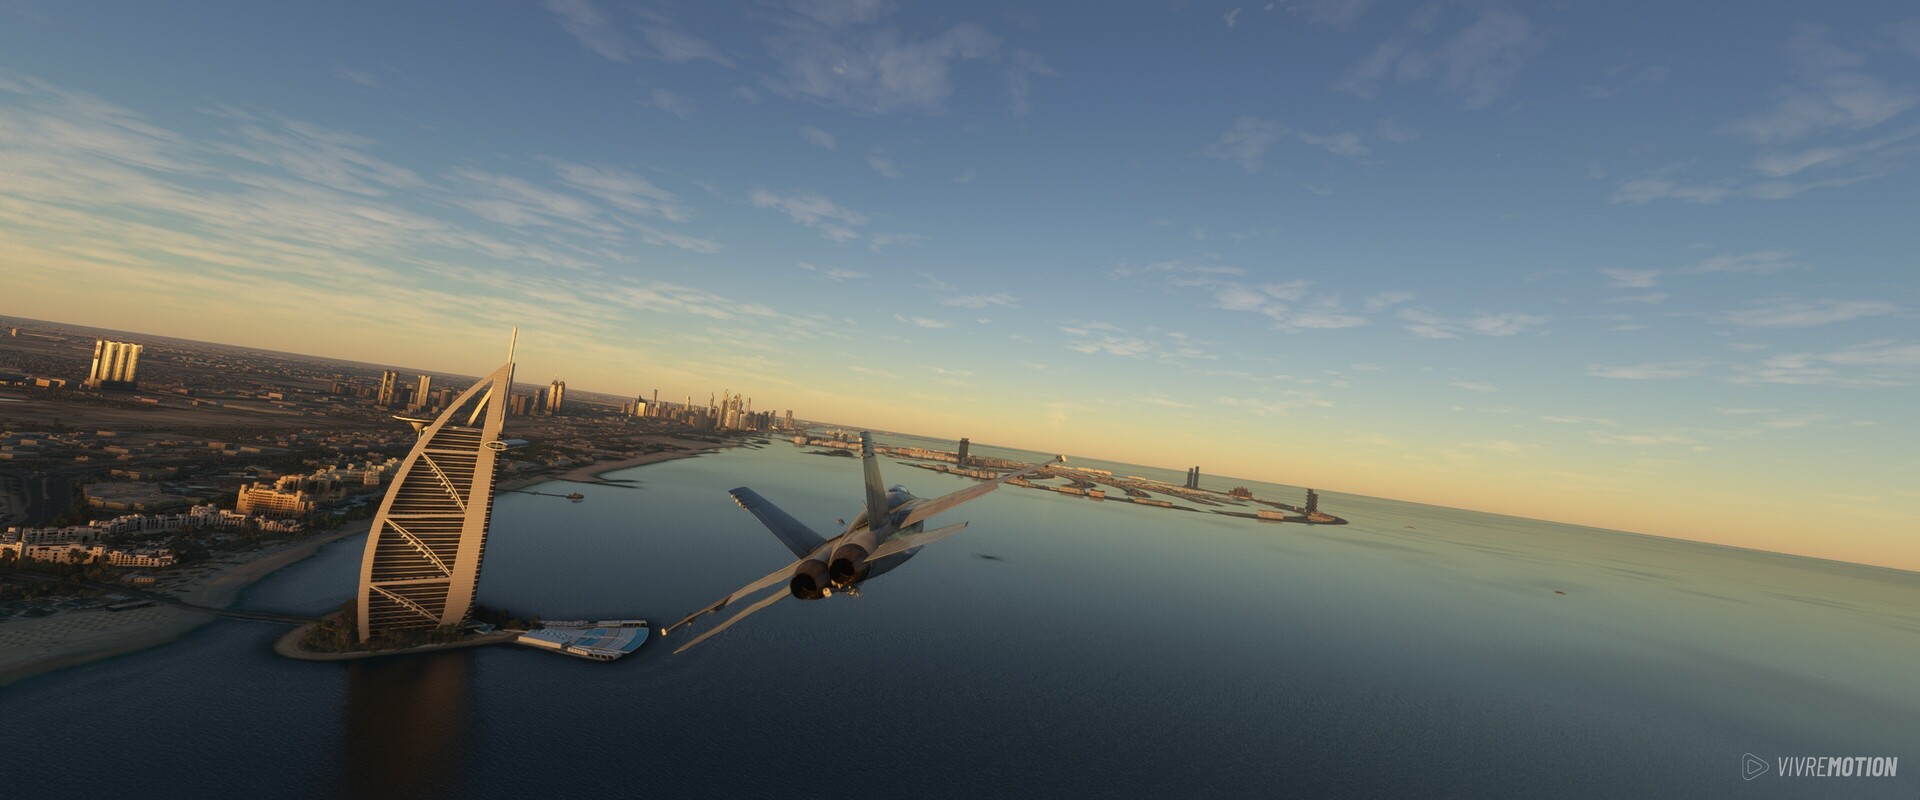 Burj Al Arab, Dubai - Boeing F/A-18 Super Hornet - Microsoft Flight Simulator - VIVRE-MOTION